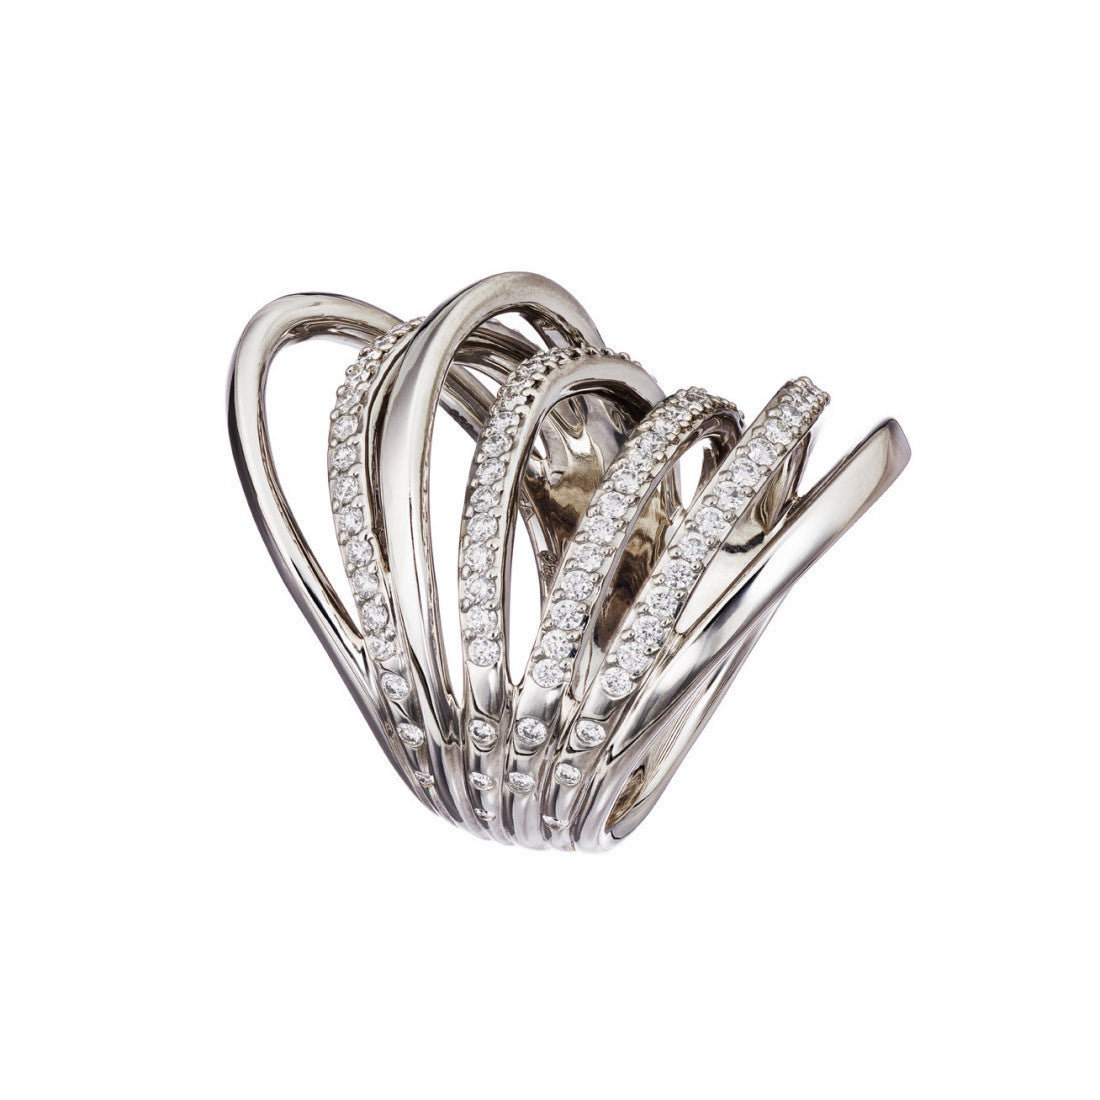 Shraddhashreegems Women's Three Stone Round Brilliant Cut Diamond  Engagement Ring at Rs 10900 in New Delhi